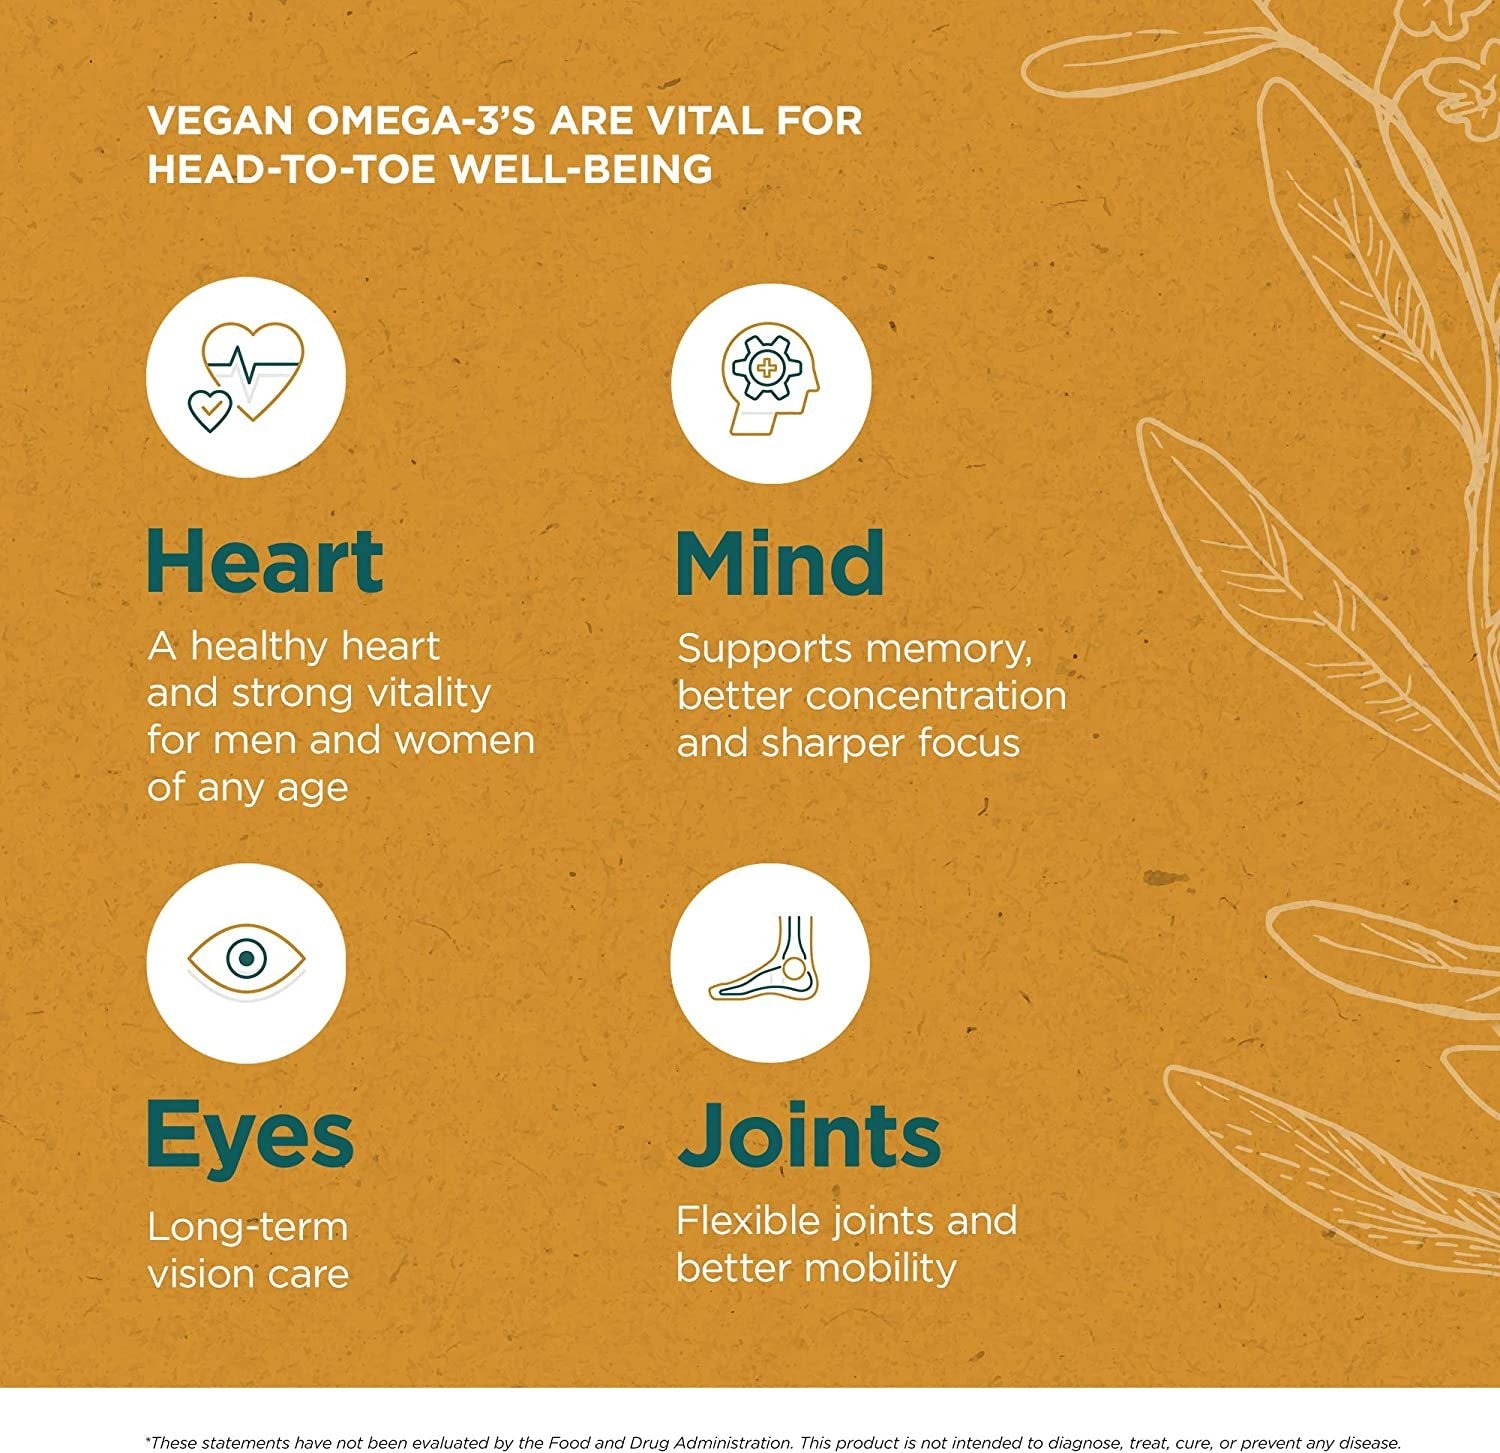 Wiley's Finest CatchFree Vegan Omega 3 Supplement, Organic Plant-Based Algae Oil DHA + EPA Fatty Acids, Fish Oil Alternative, Supports Heart, Brain, Joint Health, Vegetarian, Non-GMO, 60 Softgels